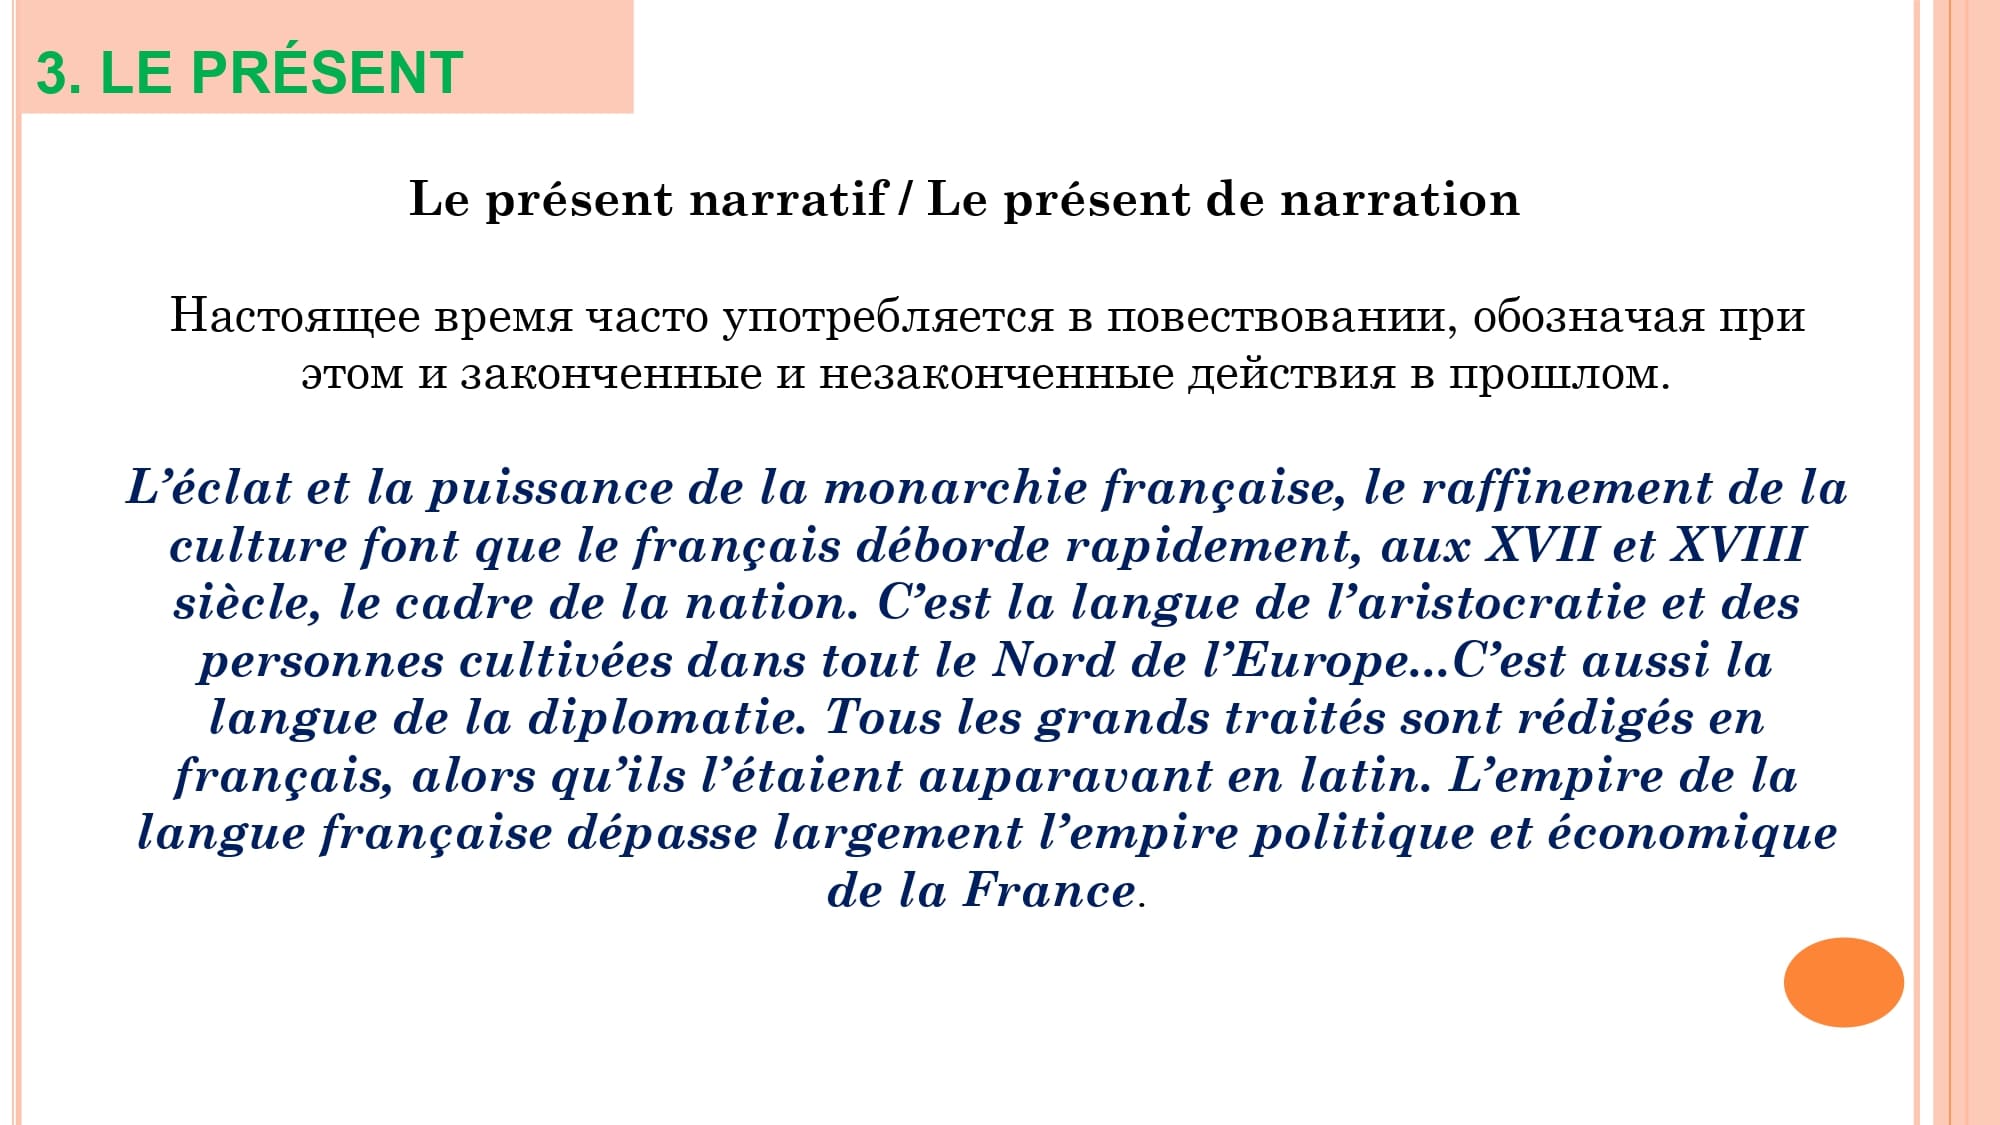 Грамматика французского менталитета: национальное достояние + le présent